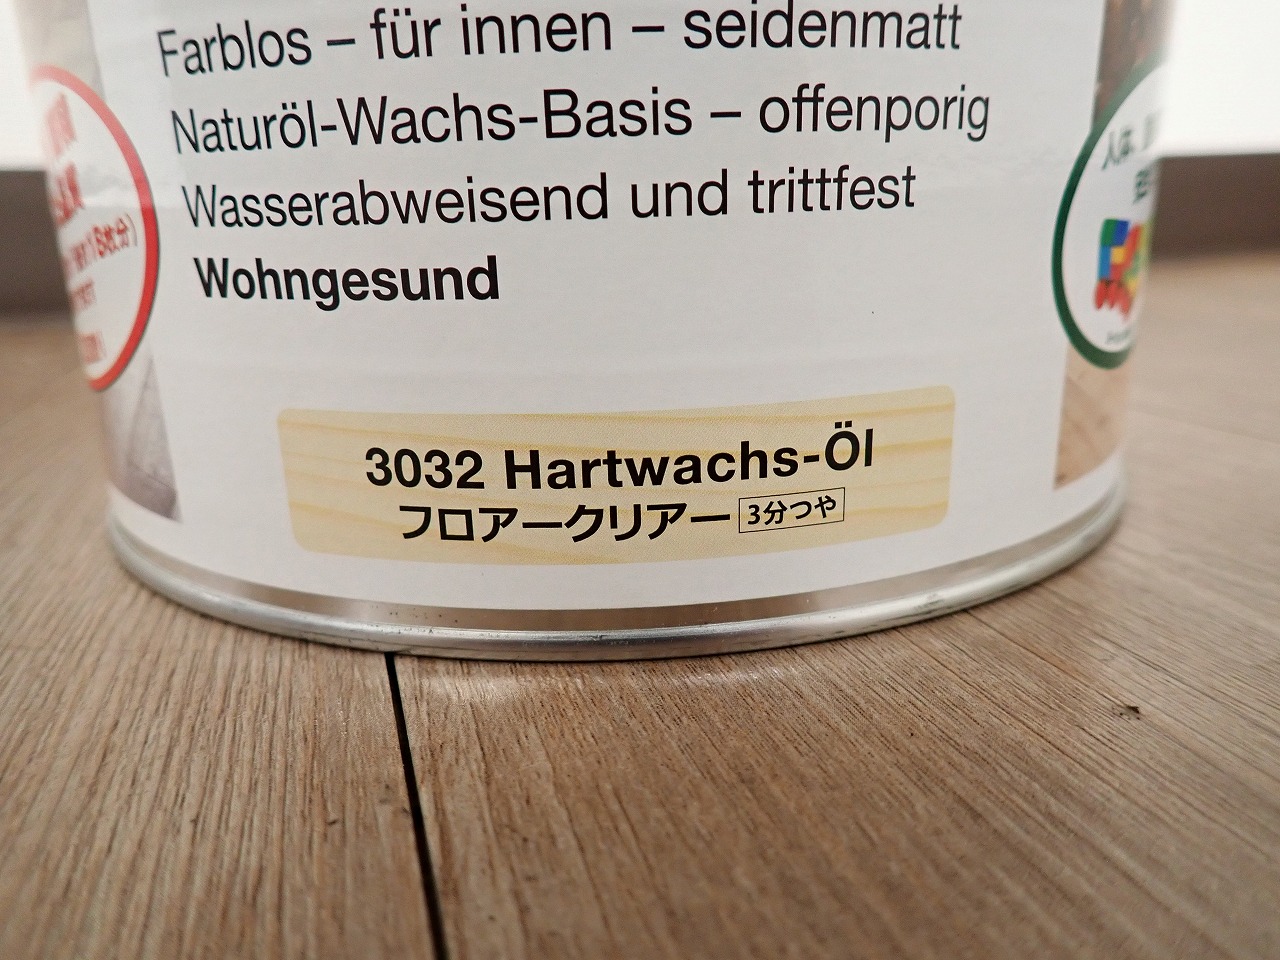 3032 Hartwachs-Oi 2.5L